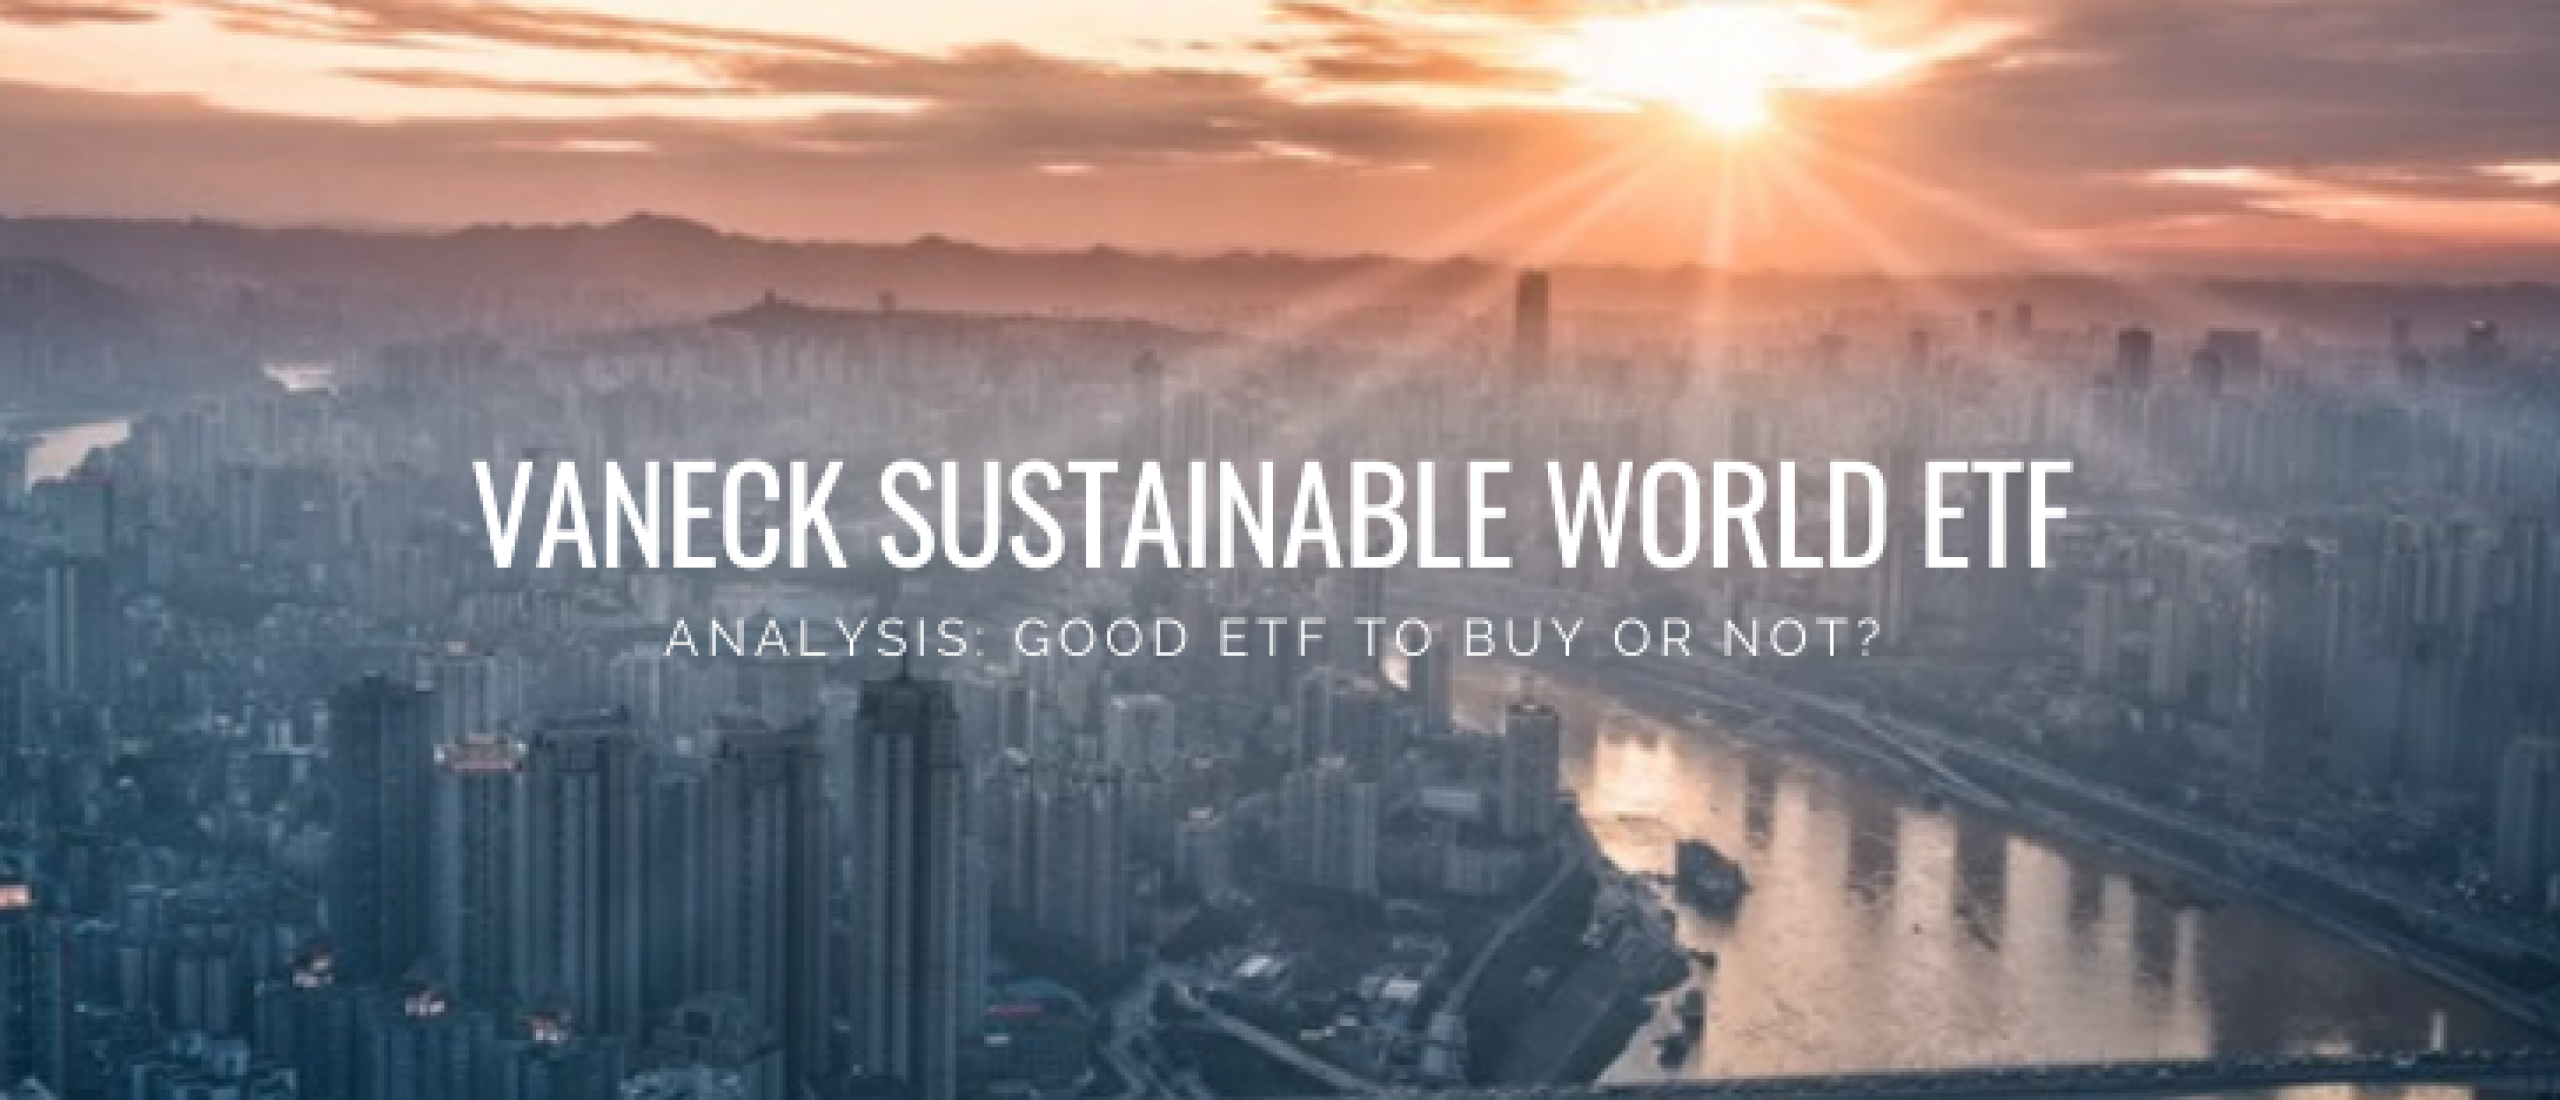 Analysis VanEck Sustainable World ETF (TSWE): Buy or Not to Buy?